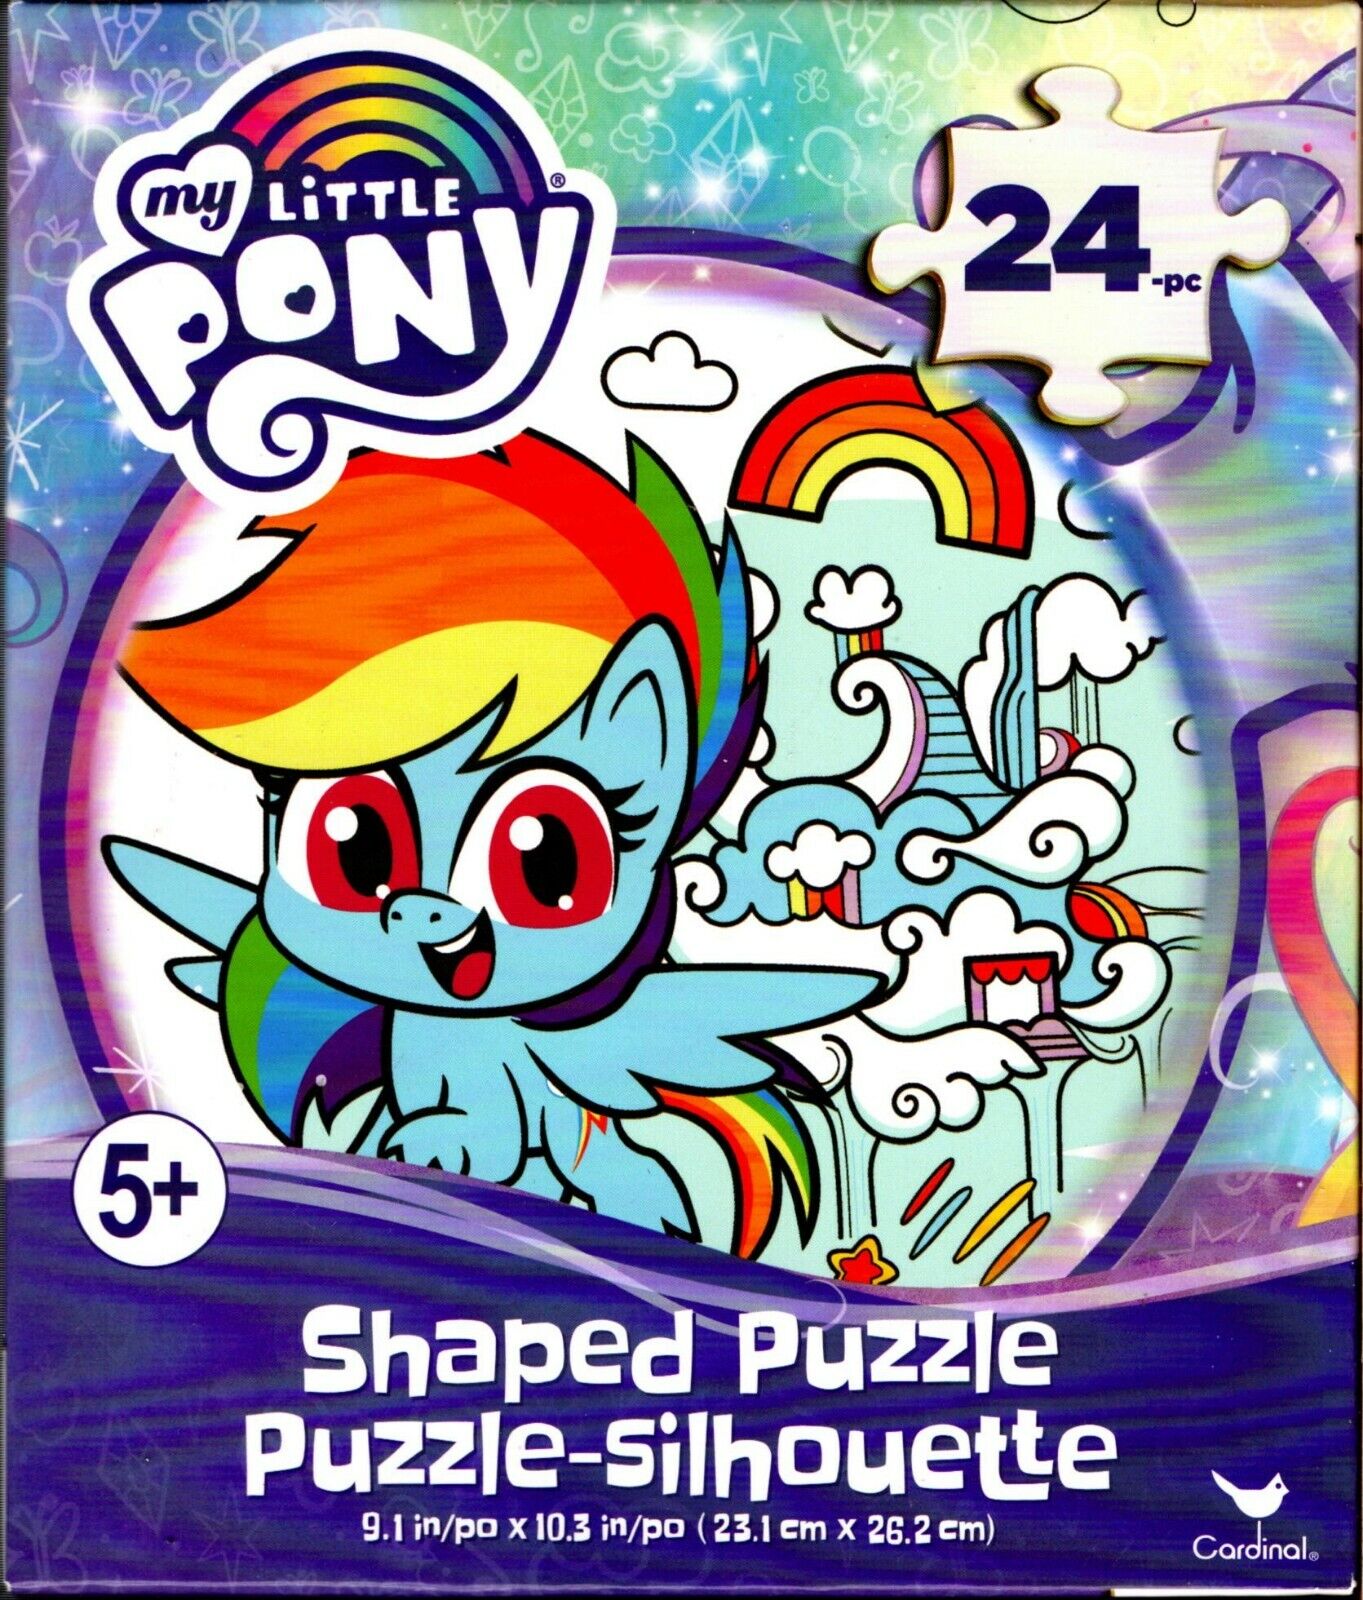 My Little Pony - 24 Shaped Jigsaw Puzzle v7